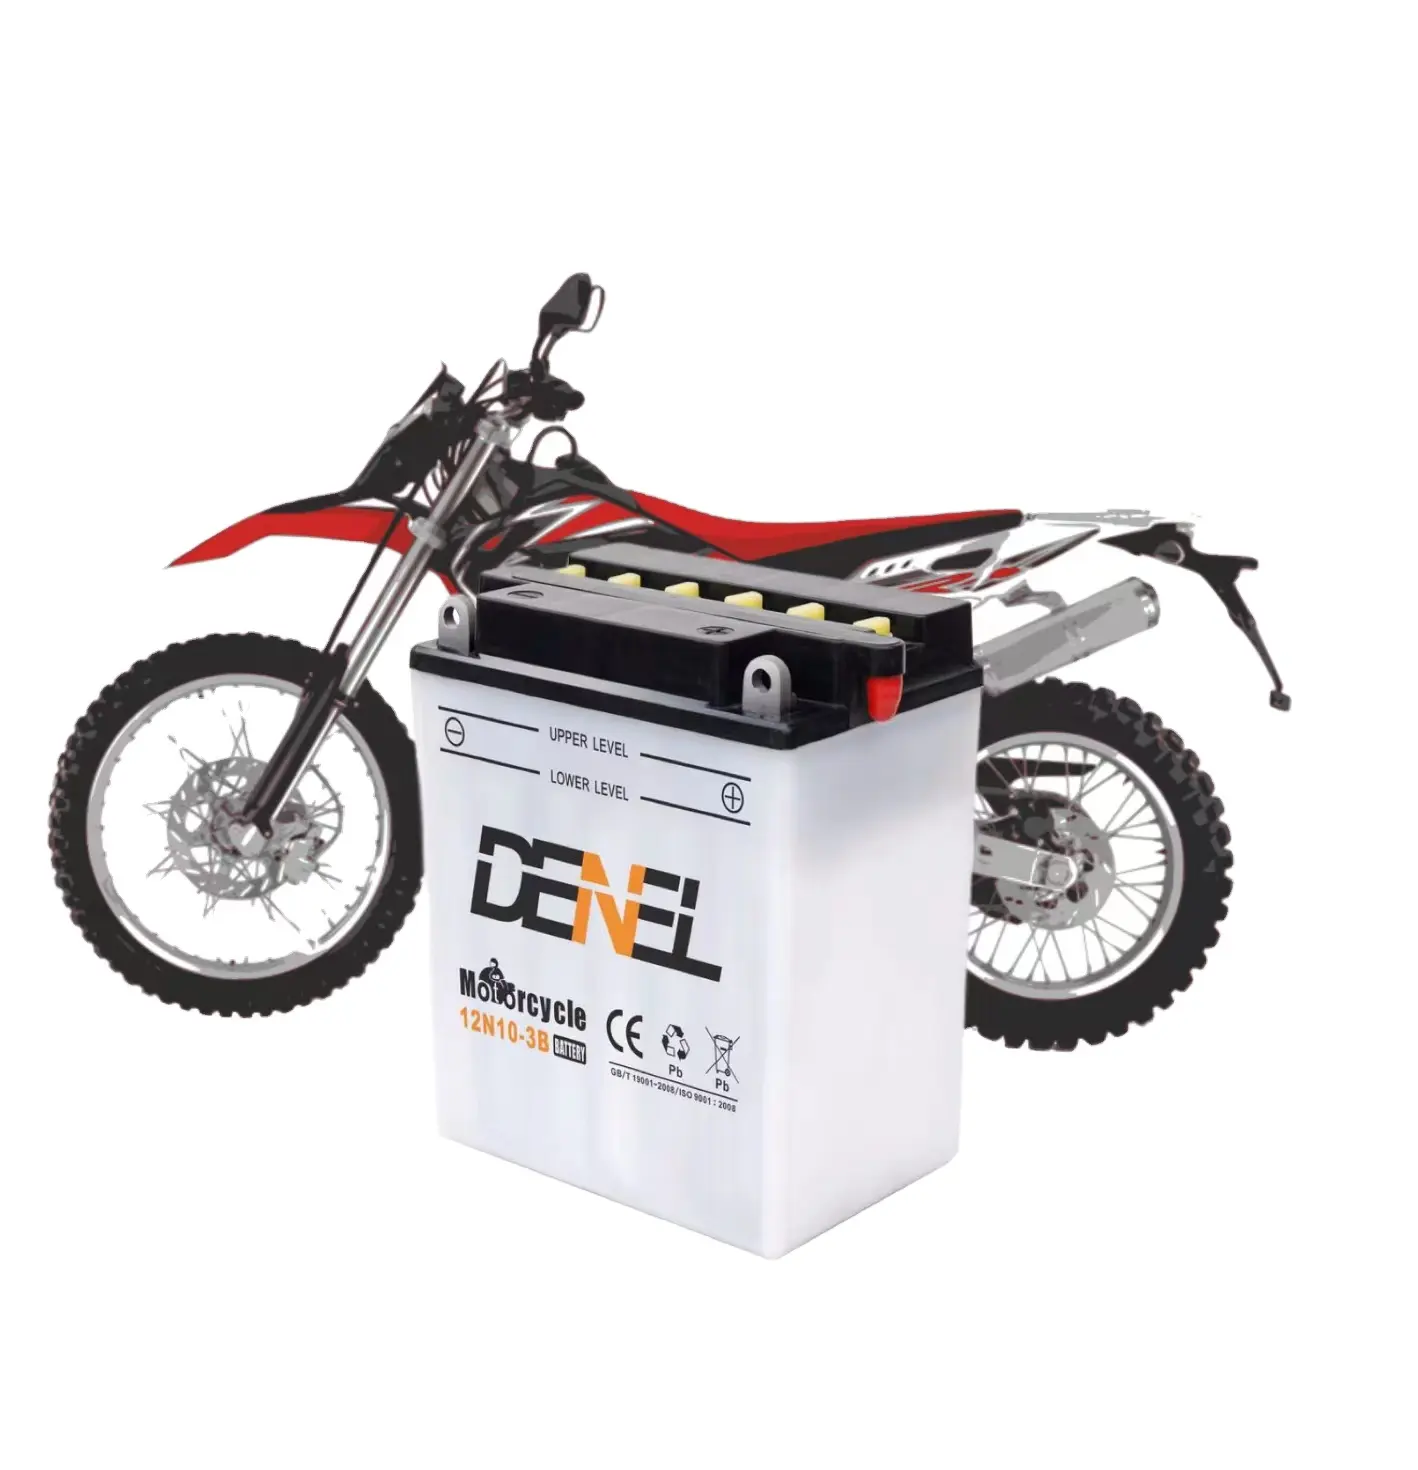 Bateria de moto para traxx biz vizinha 125 Bateria Para Motos Import ada 12v 10ah Motorrad batterie